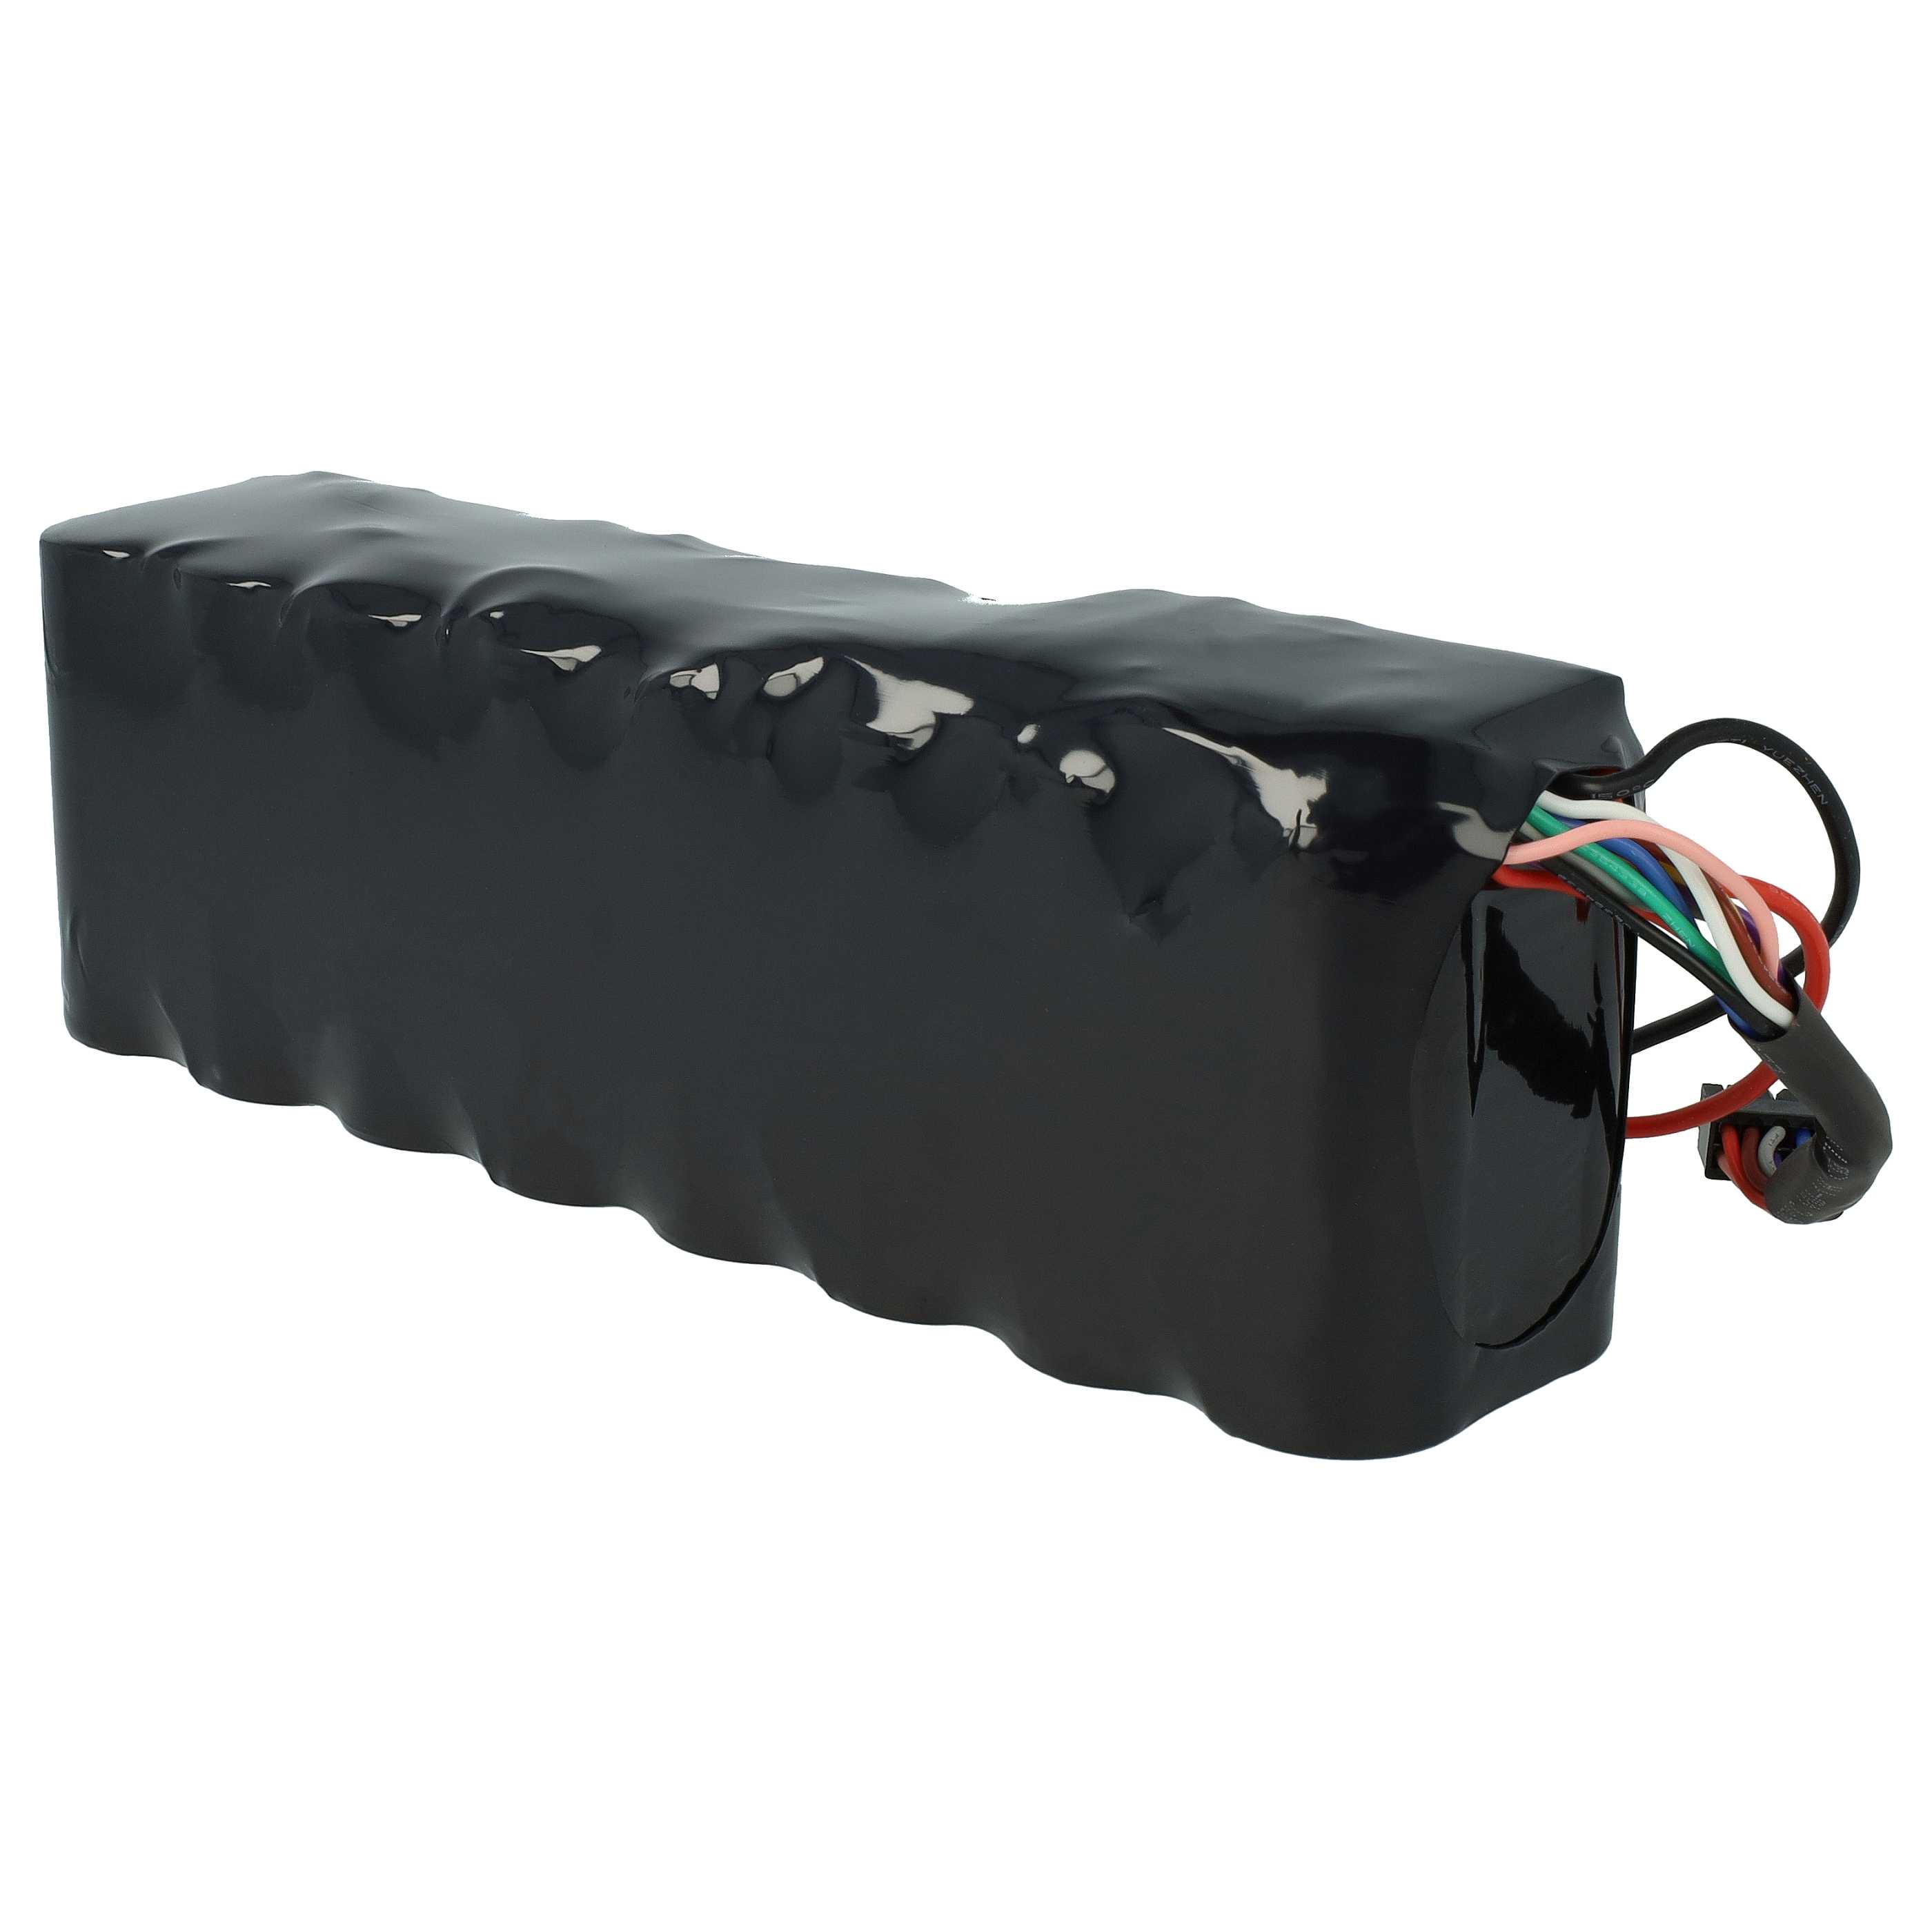 Battery Replacement for MRK6103A, MRK6105A, BAT6001B, BAT6000A, BAT6000C - 6000mAh 25.6V Li-ion